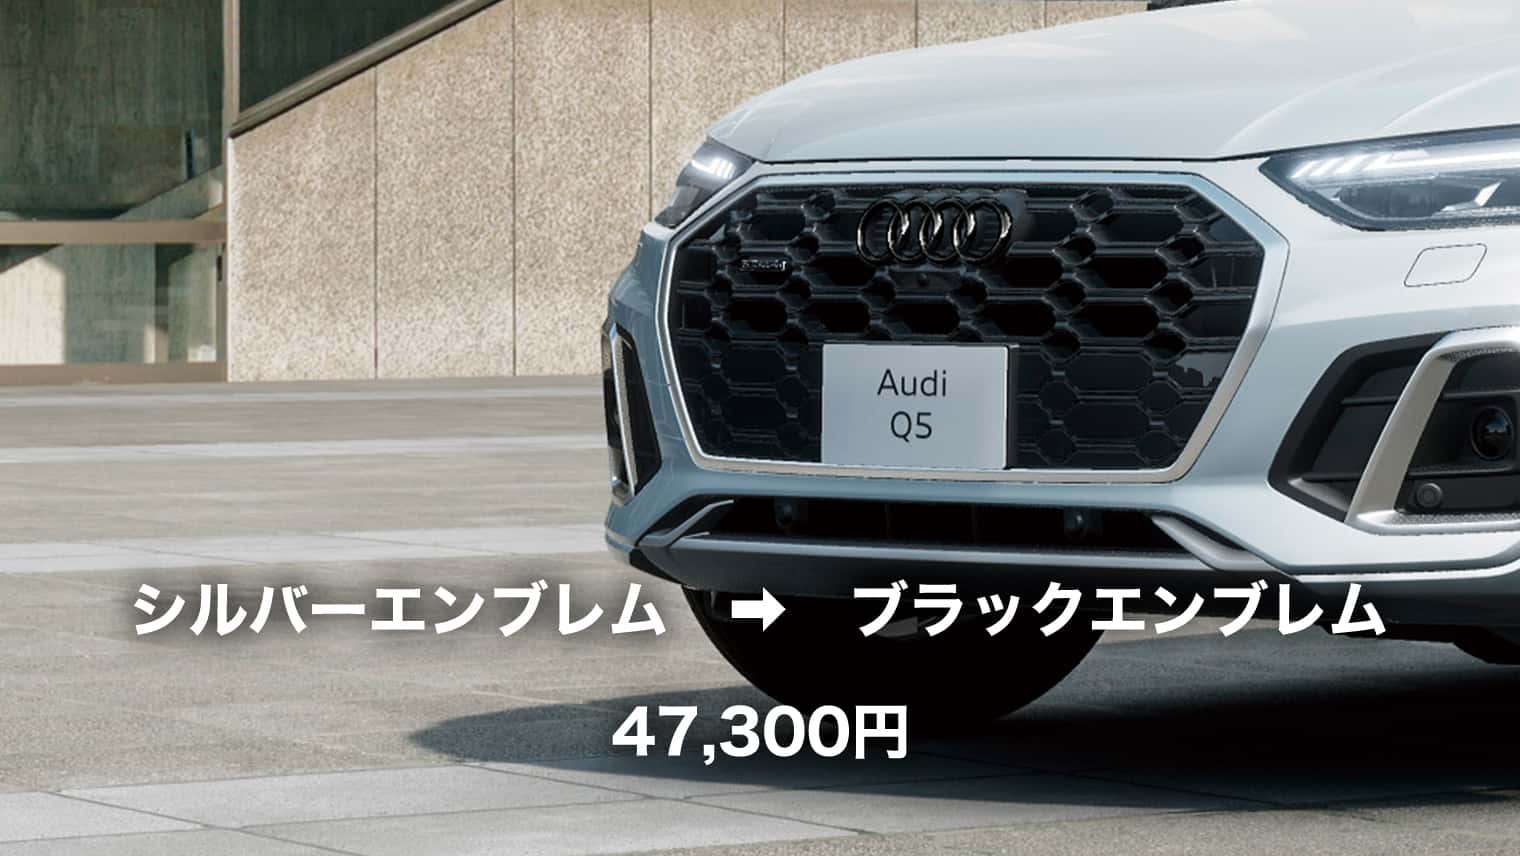 Audi和歌山 Audi Showroom Magazine Audi和歌山 Audi東大阪 Audiりんくう Audi練馬 Audi 正規ディーラー